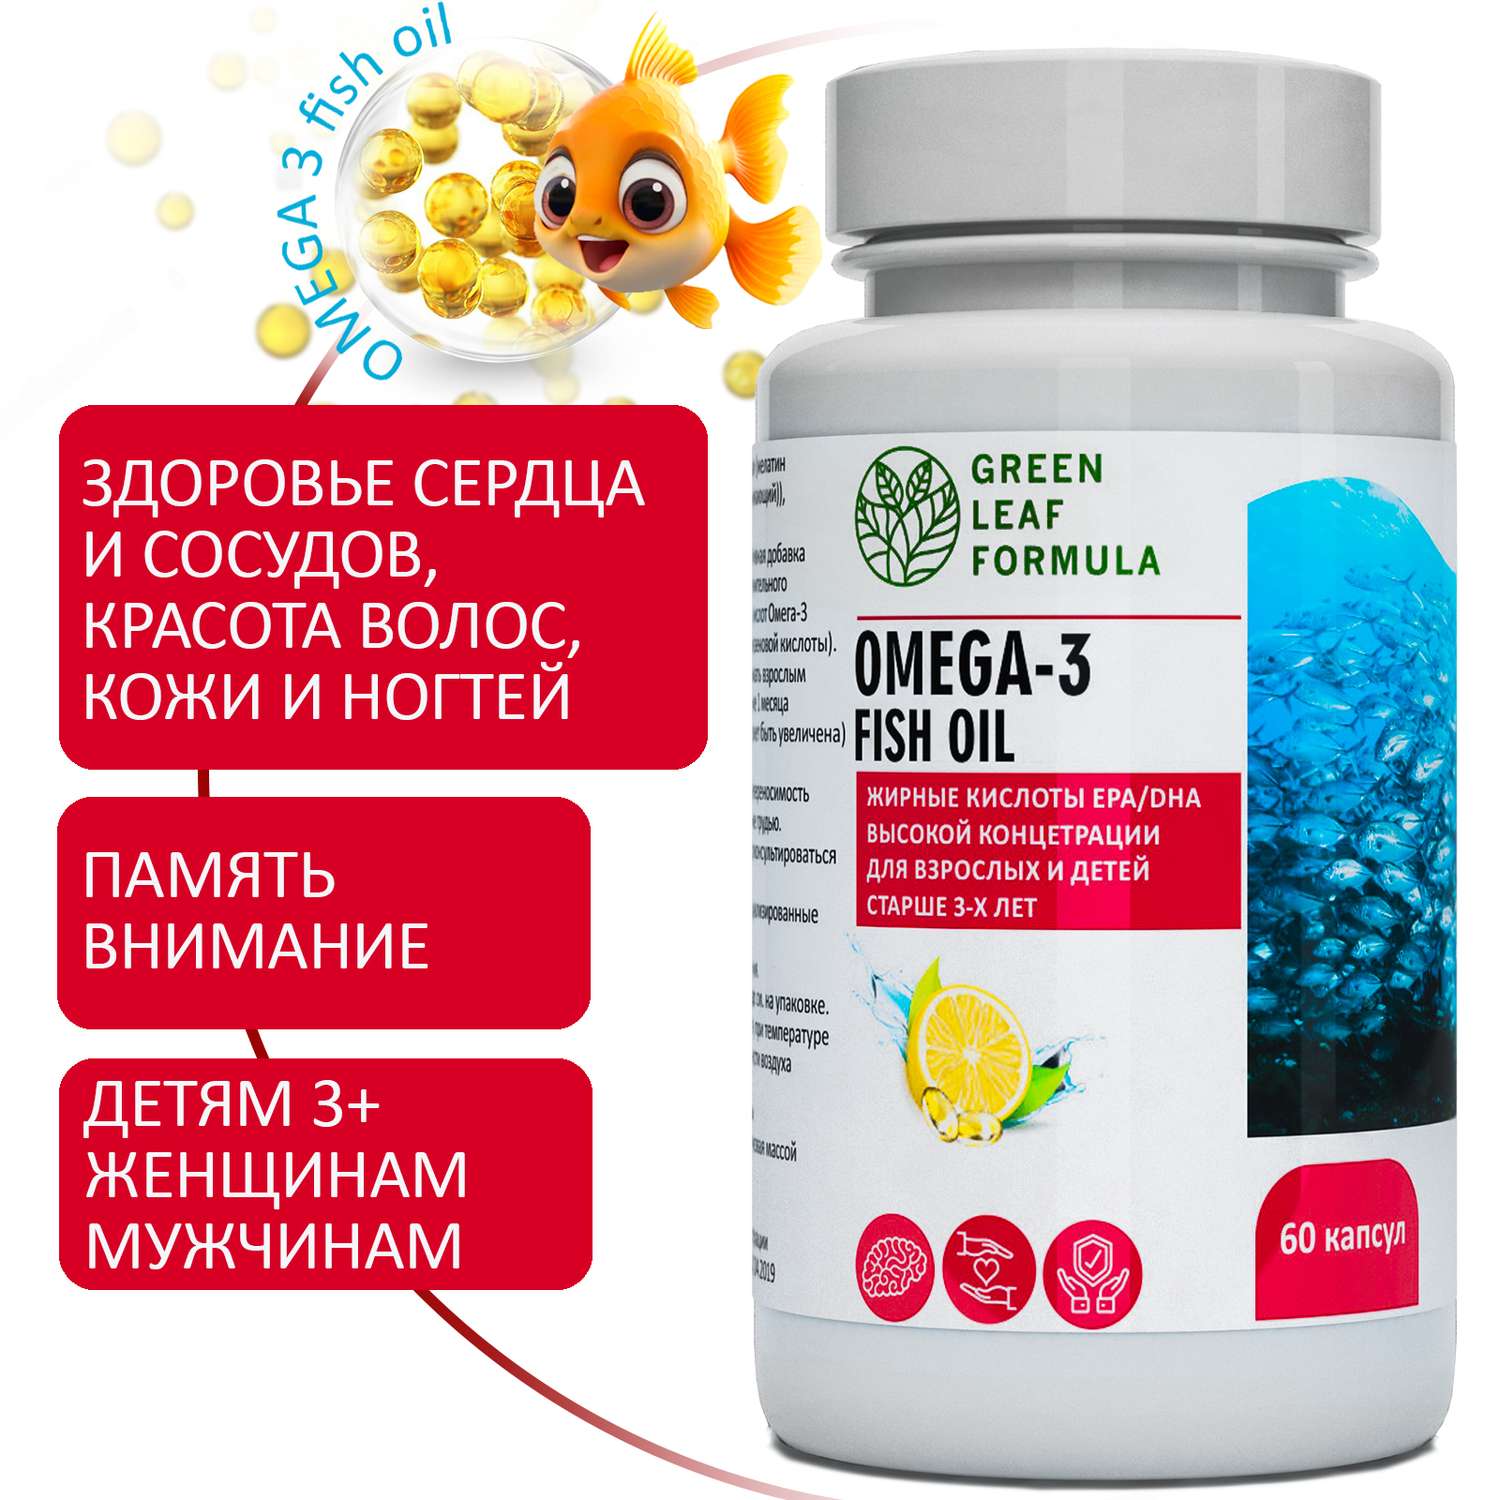 ОМЕГА 3 витамины для детей Green Leaf Formula рыбий жир в капсулах витамины для женщин и мужчин 2 банки - фото 2